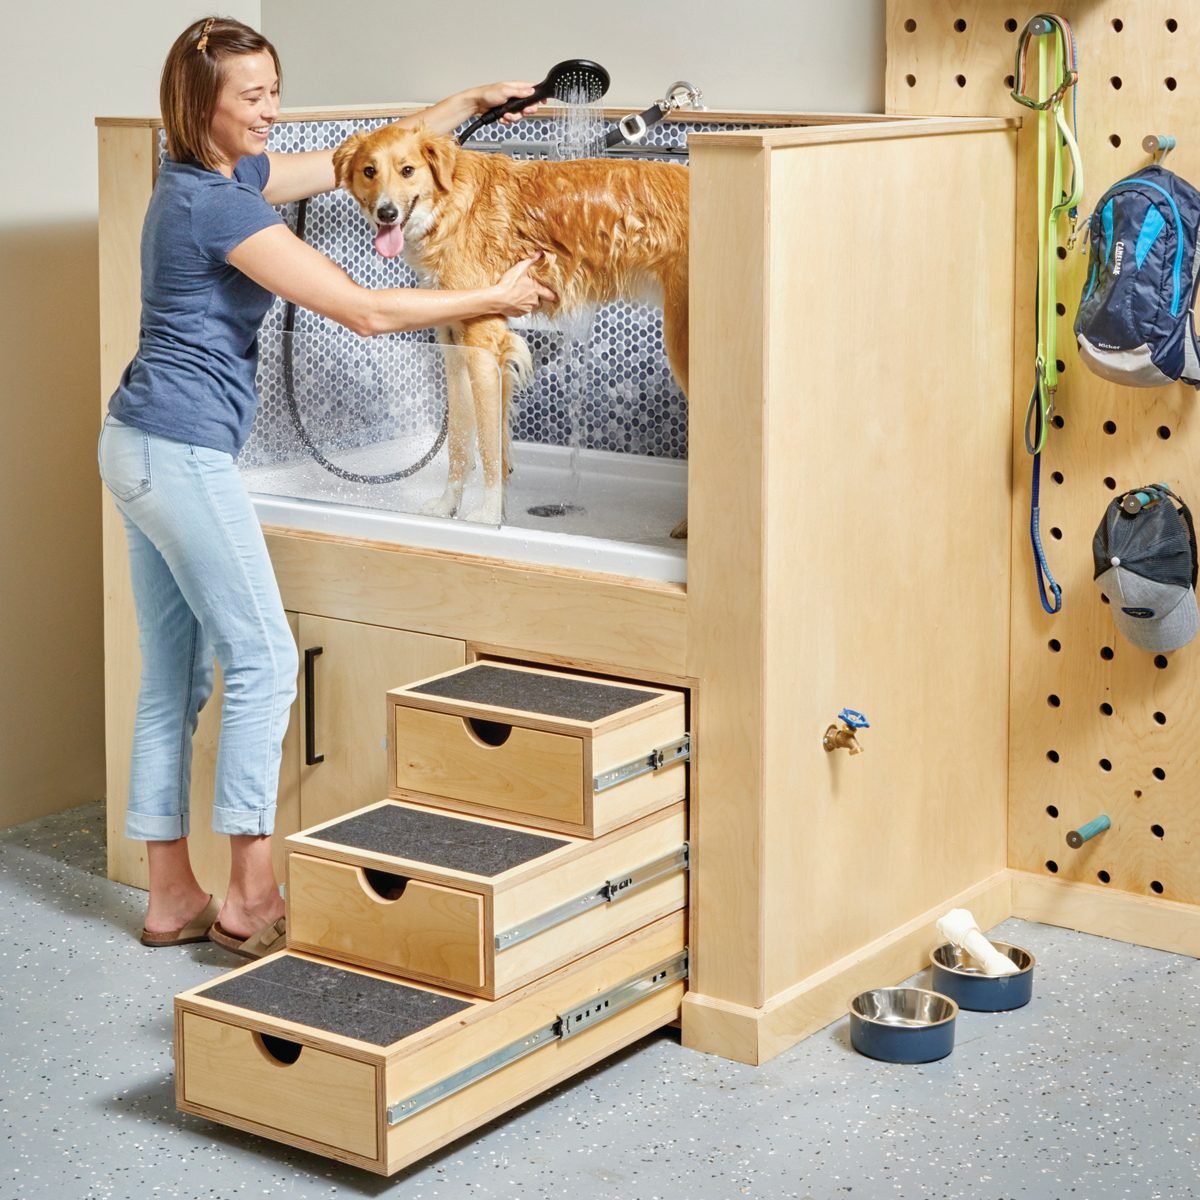 How to Build a Dog Washing Station (DIY) | Family Handyman